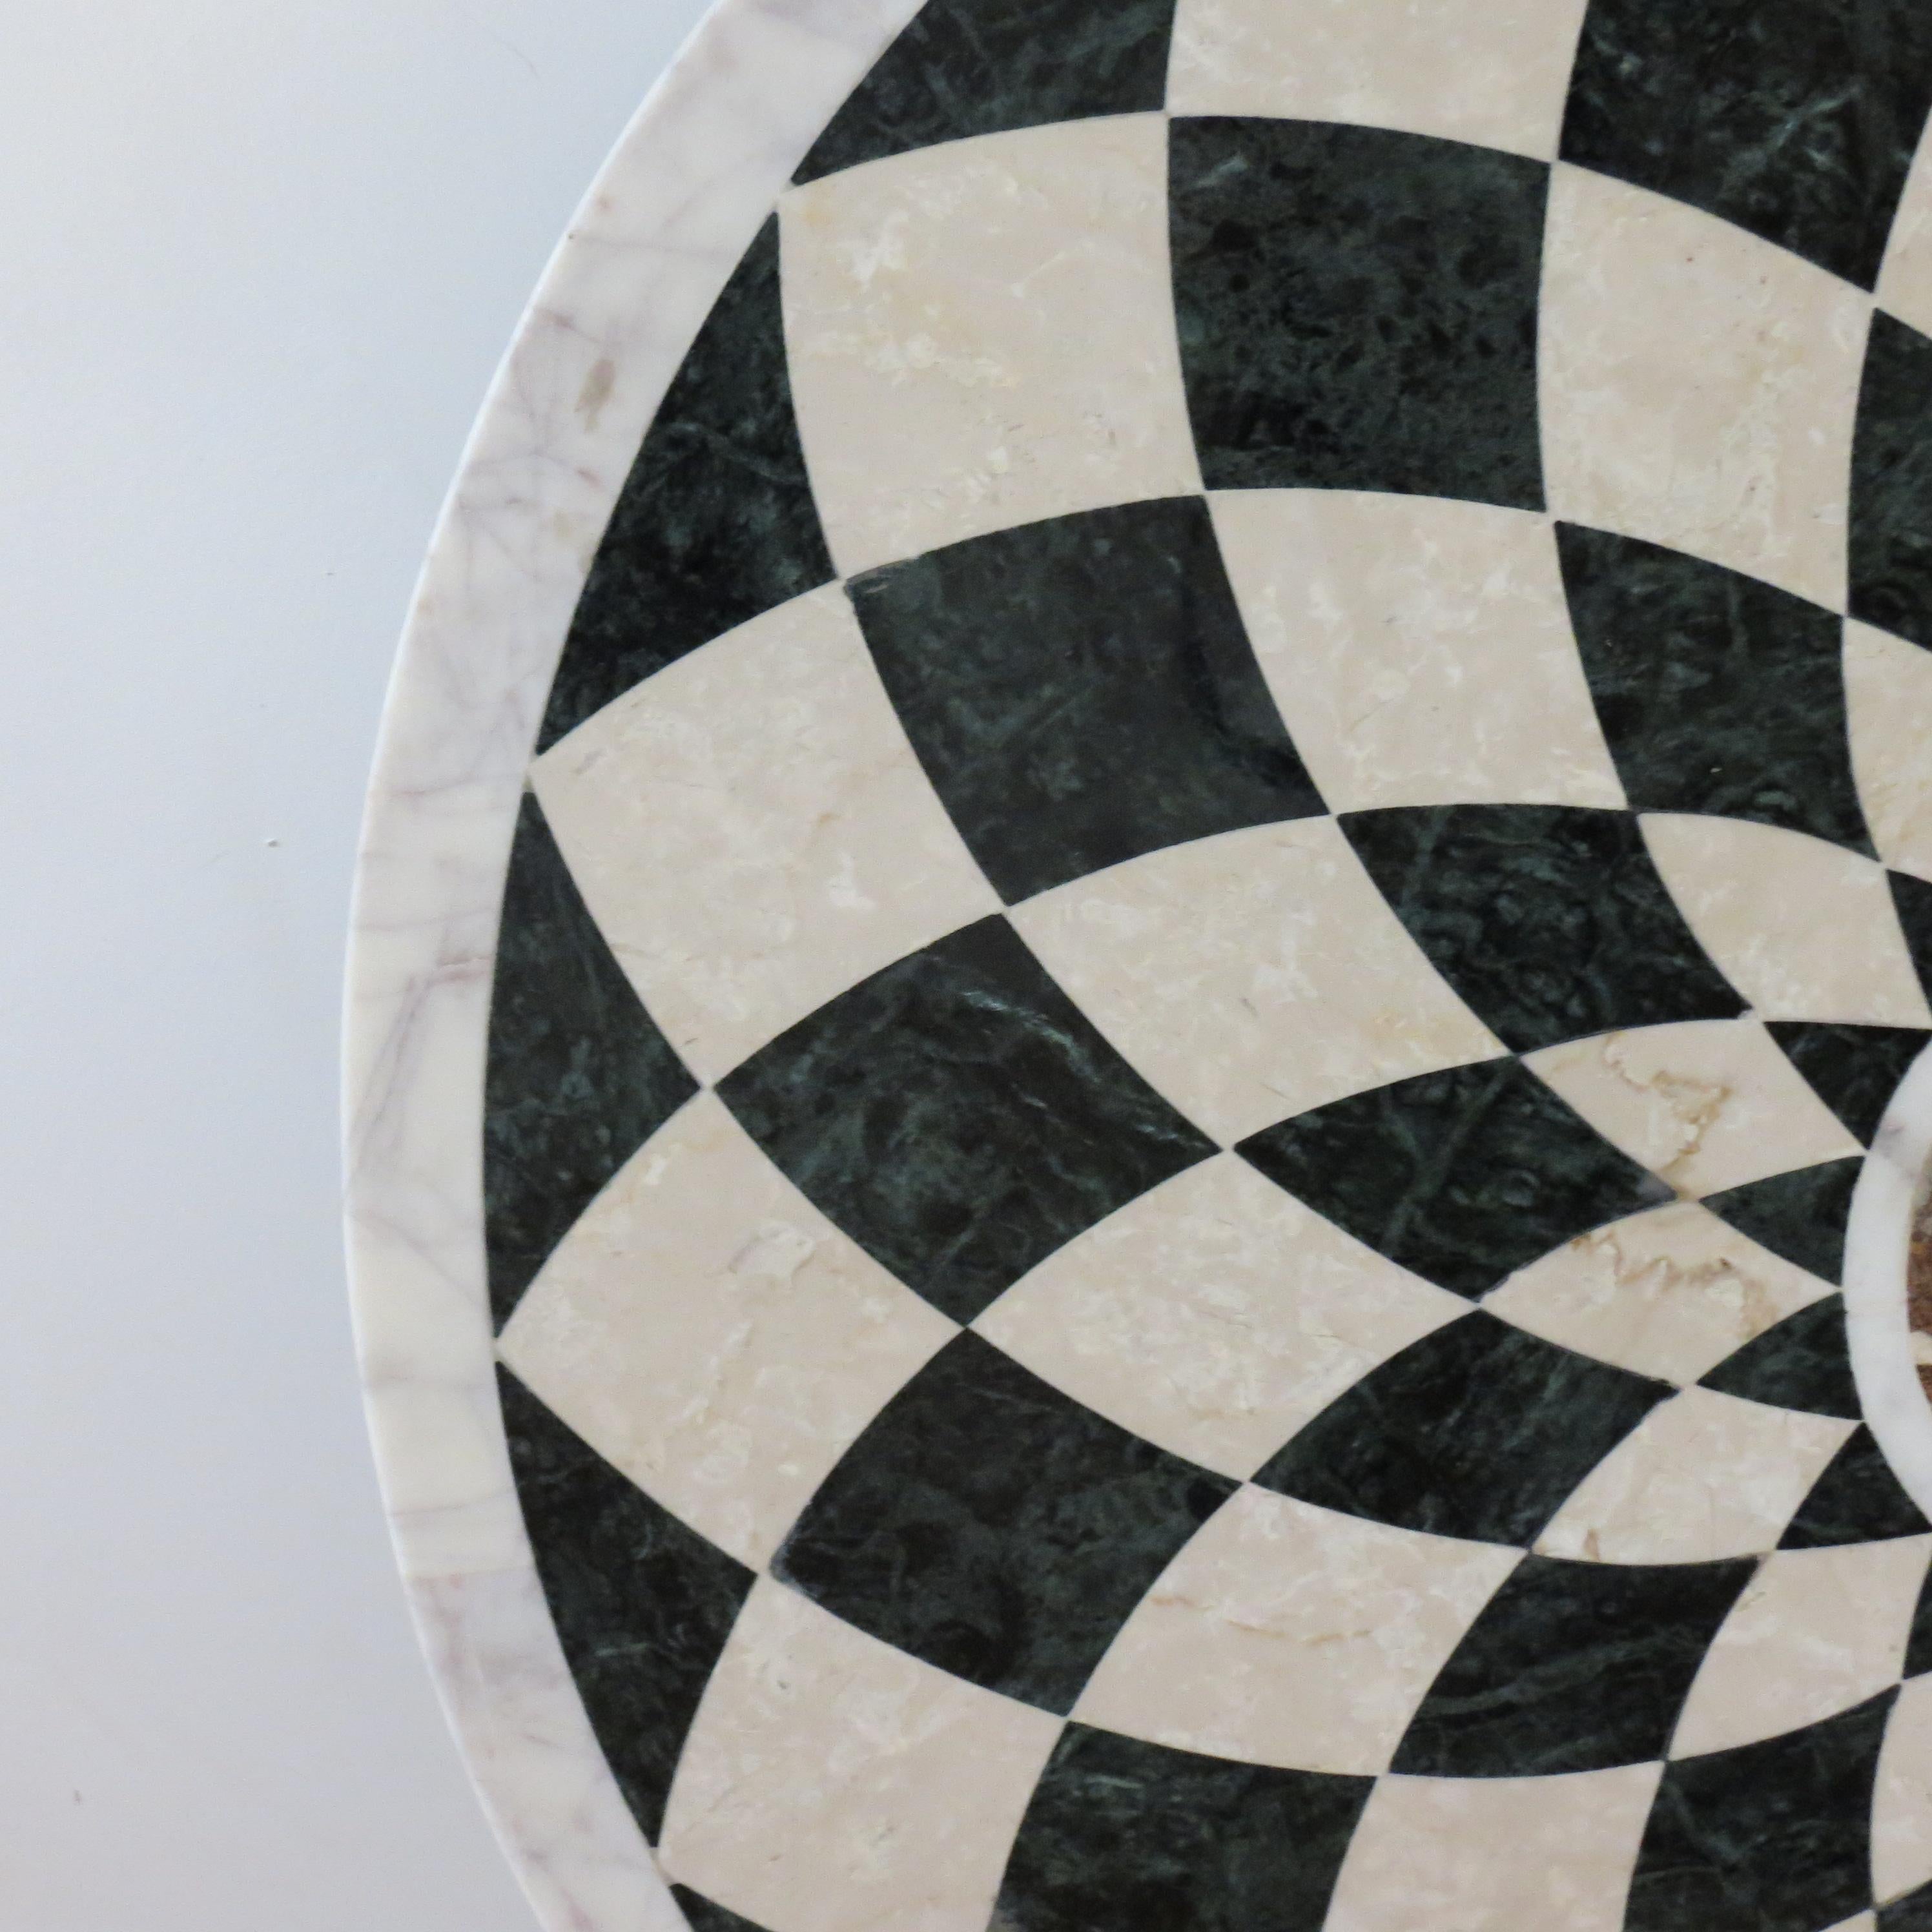 Pietra Dura Italian Marble Table Top Geometric Pattern Black White Monochrome 2